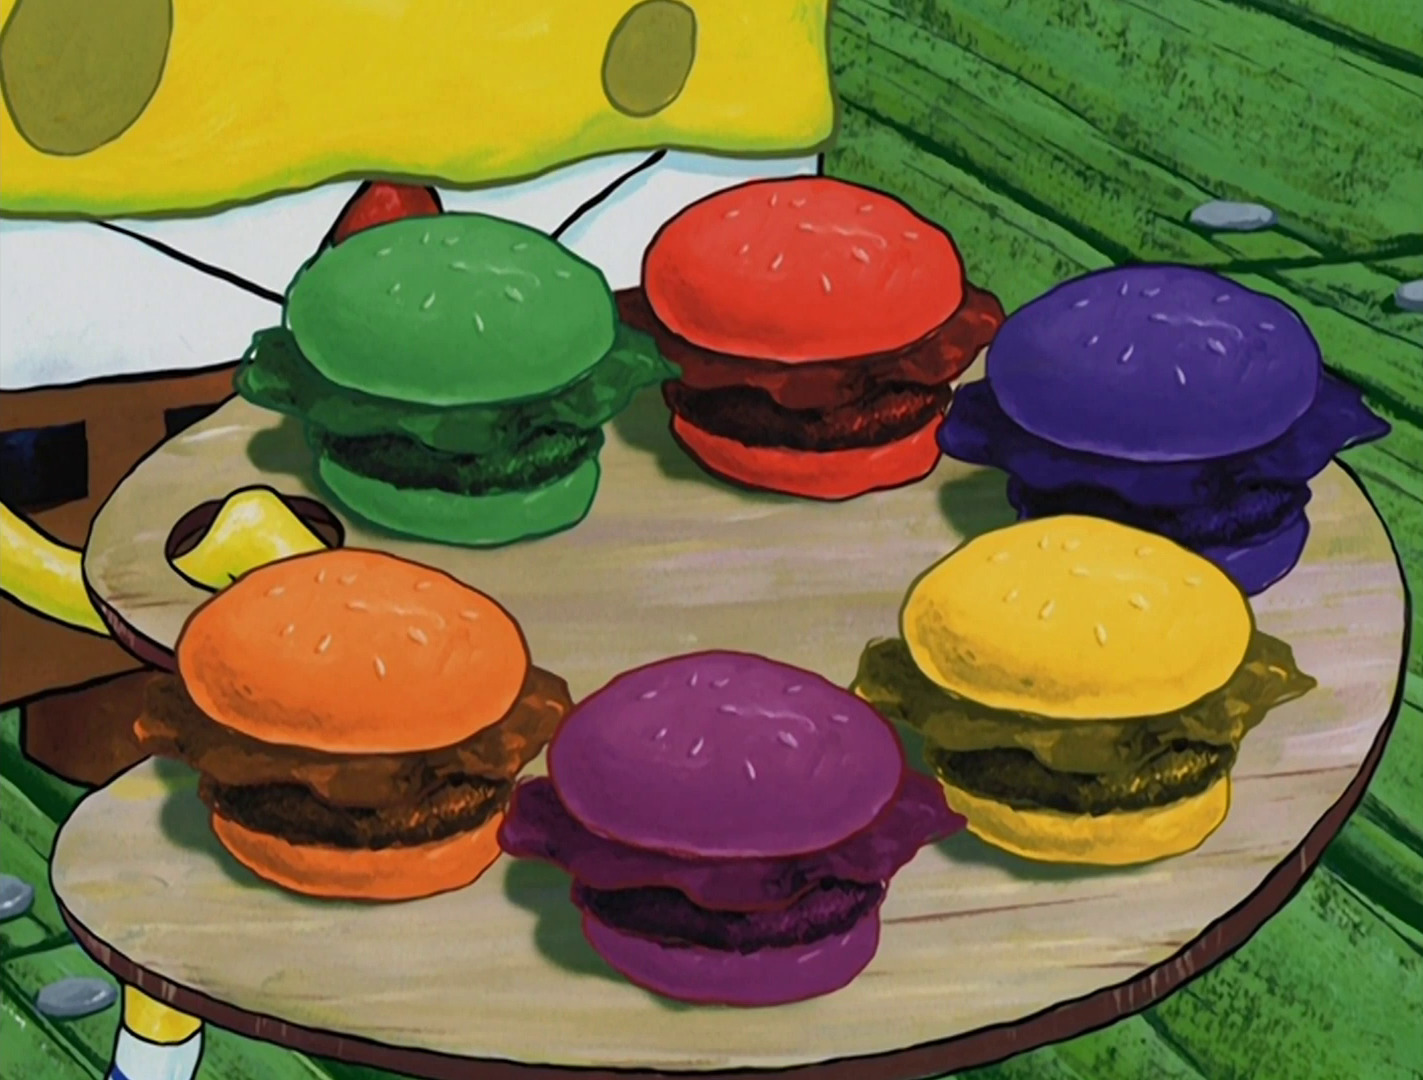 SpongeBob Pretty Patty burgers